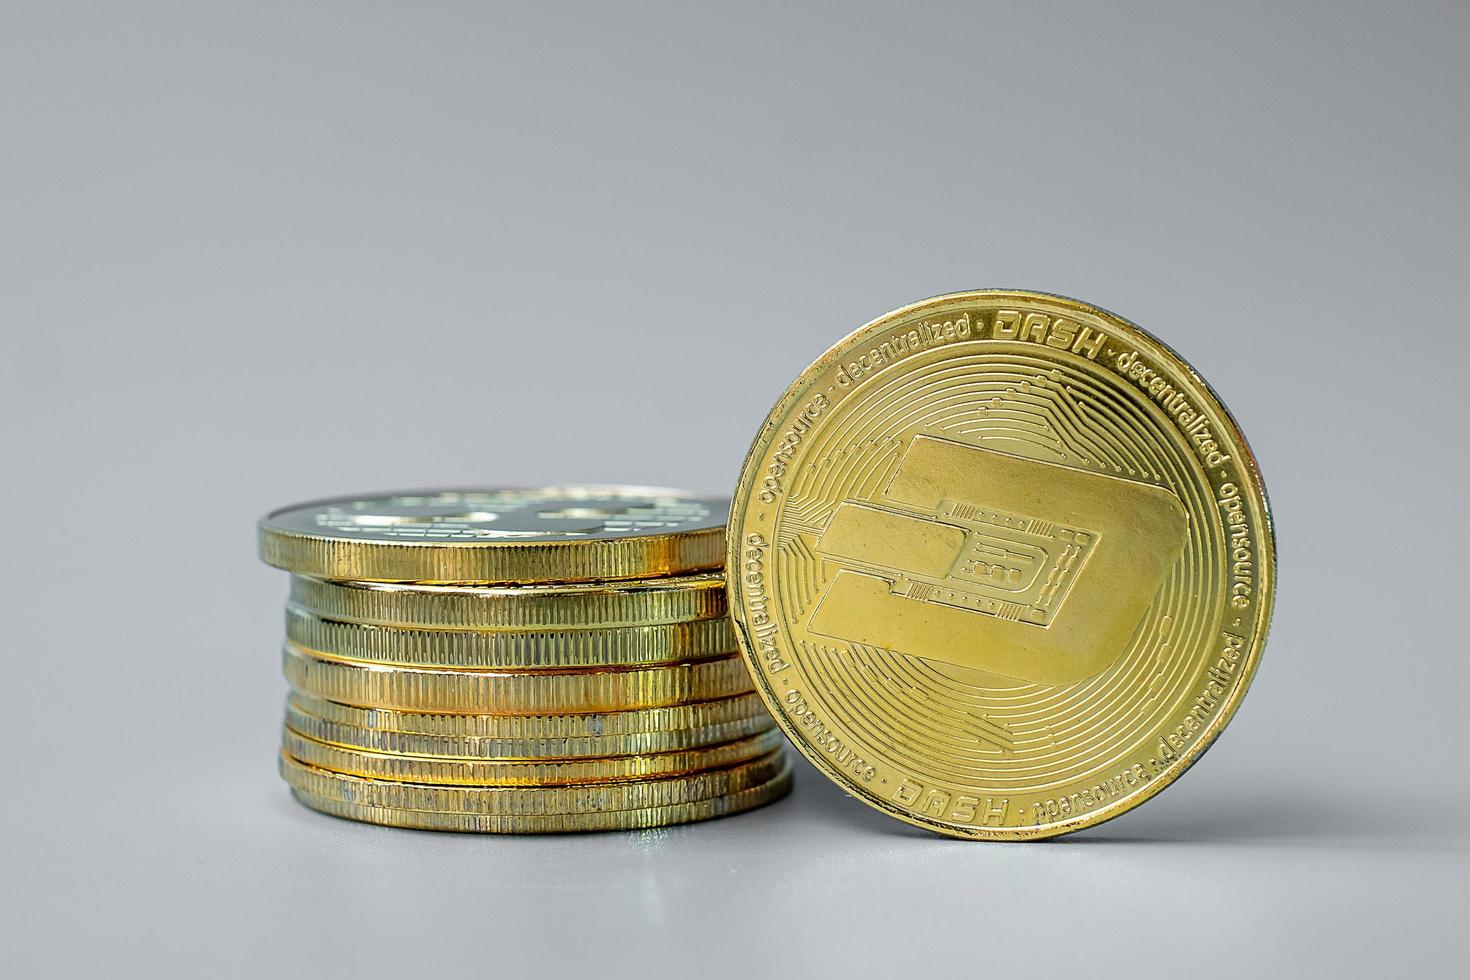 pilha de moedas de criptomoeda golden dash, criptomoeda é dinheiro digital dentro da rede blockchain, é trocada usando tecnologia e troca de internet online. conceito financeiro foto